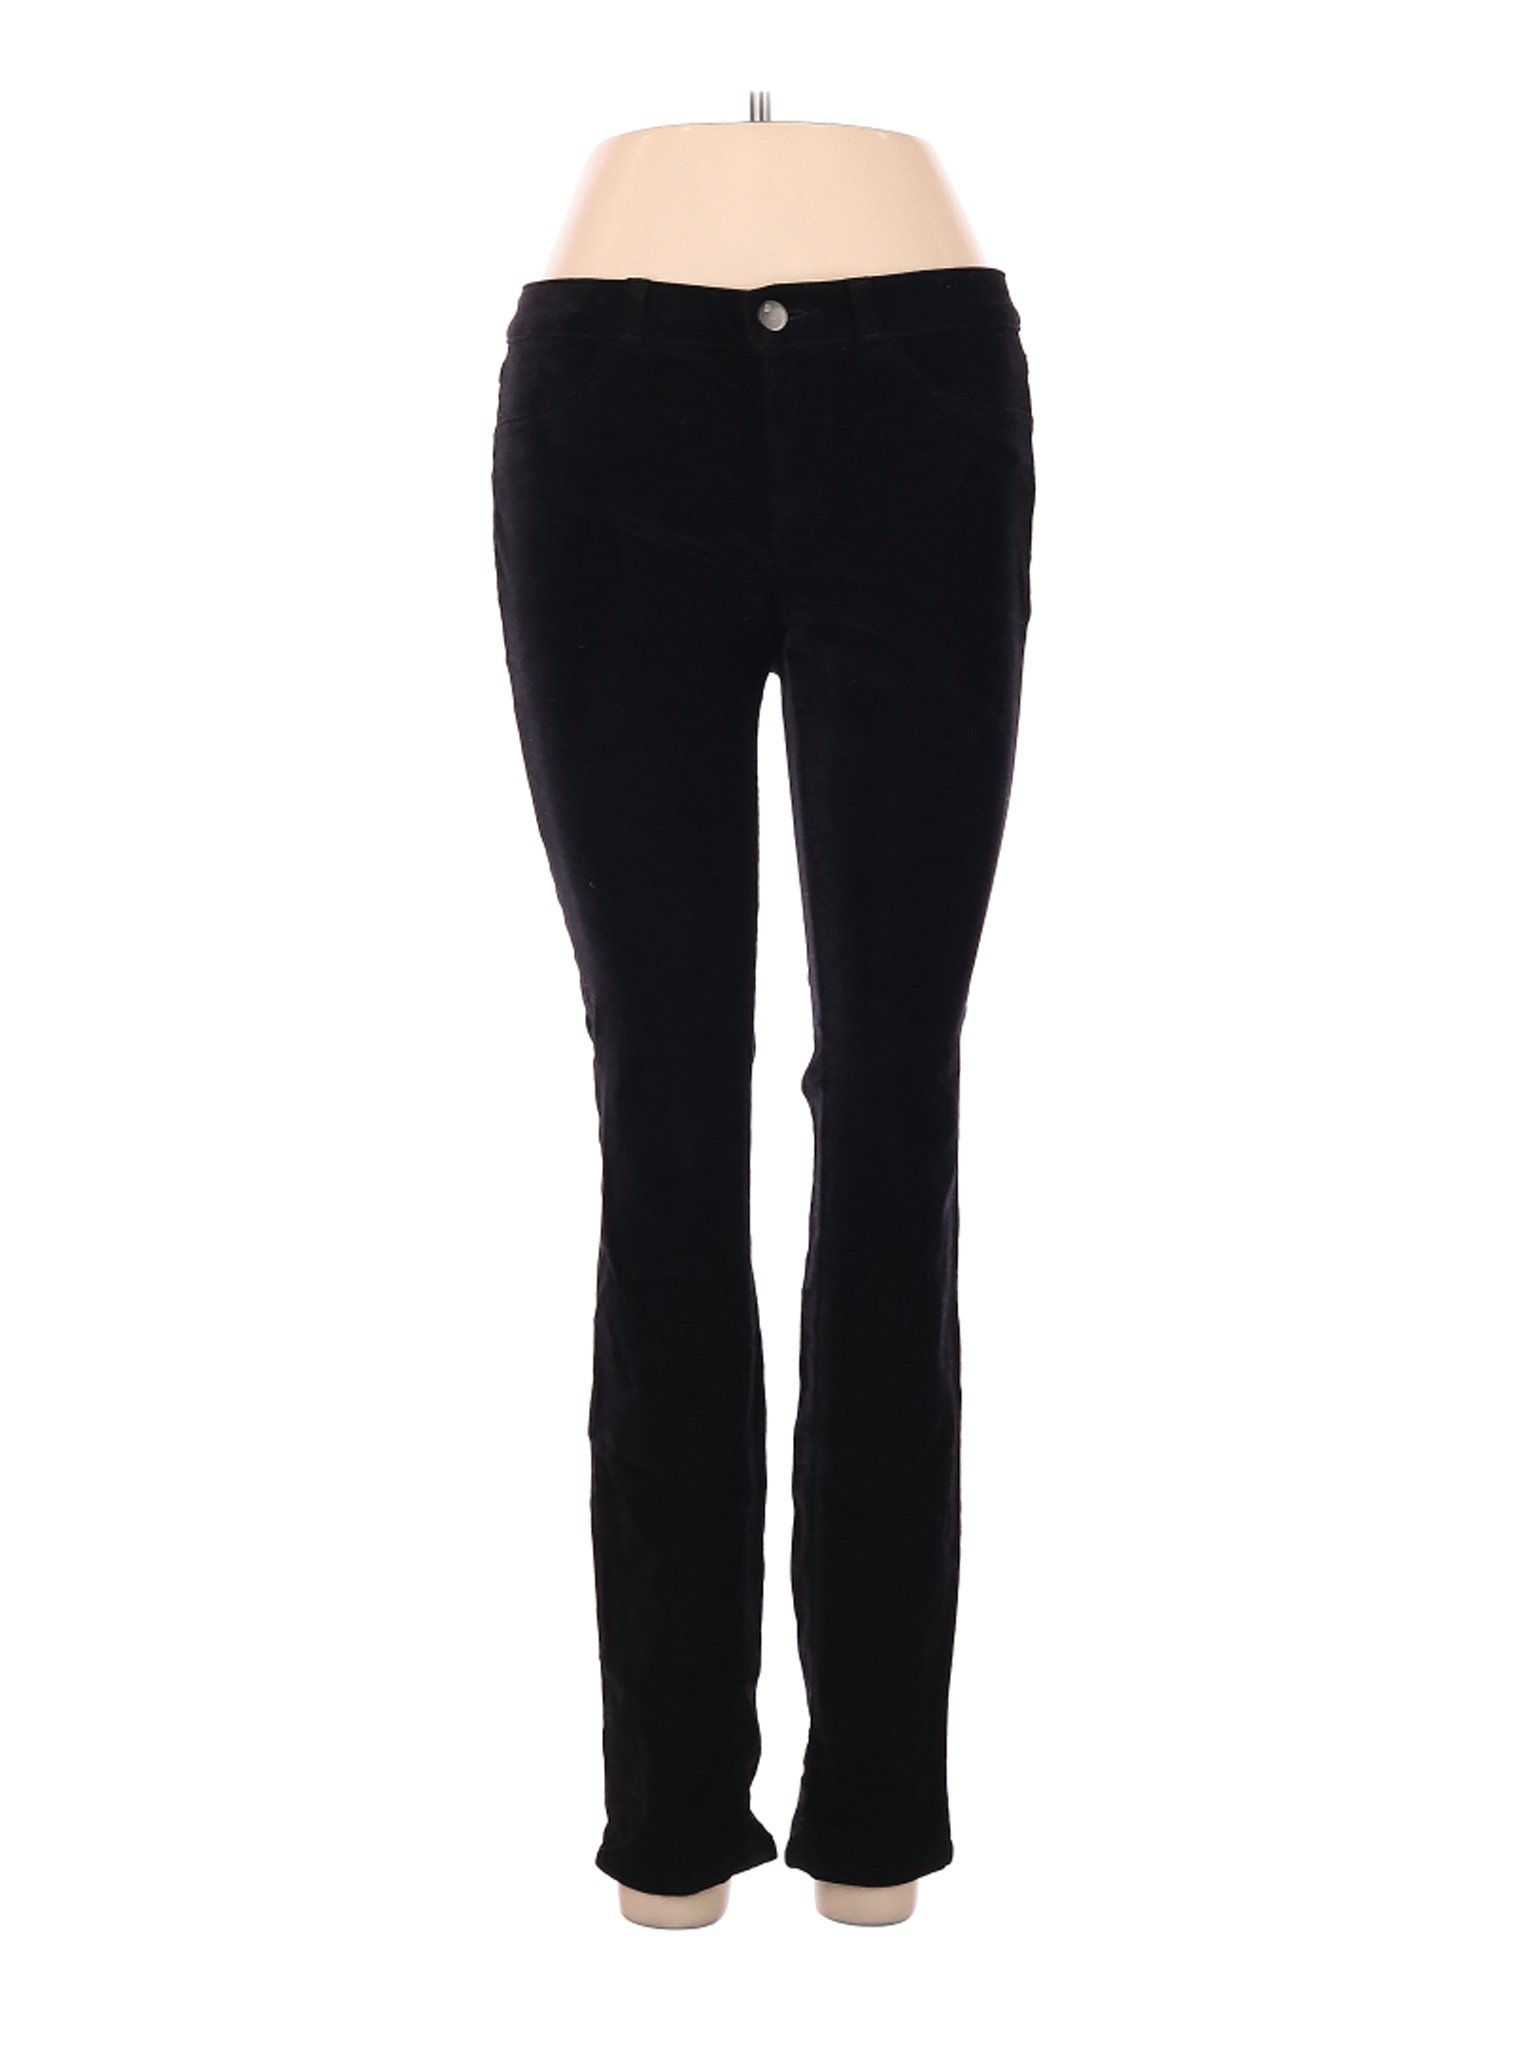 J Brand Women Black Velour Pants M | eBay